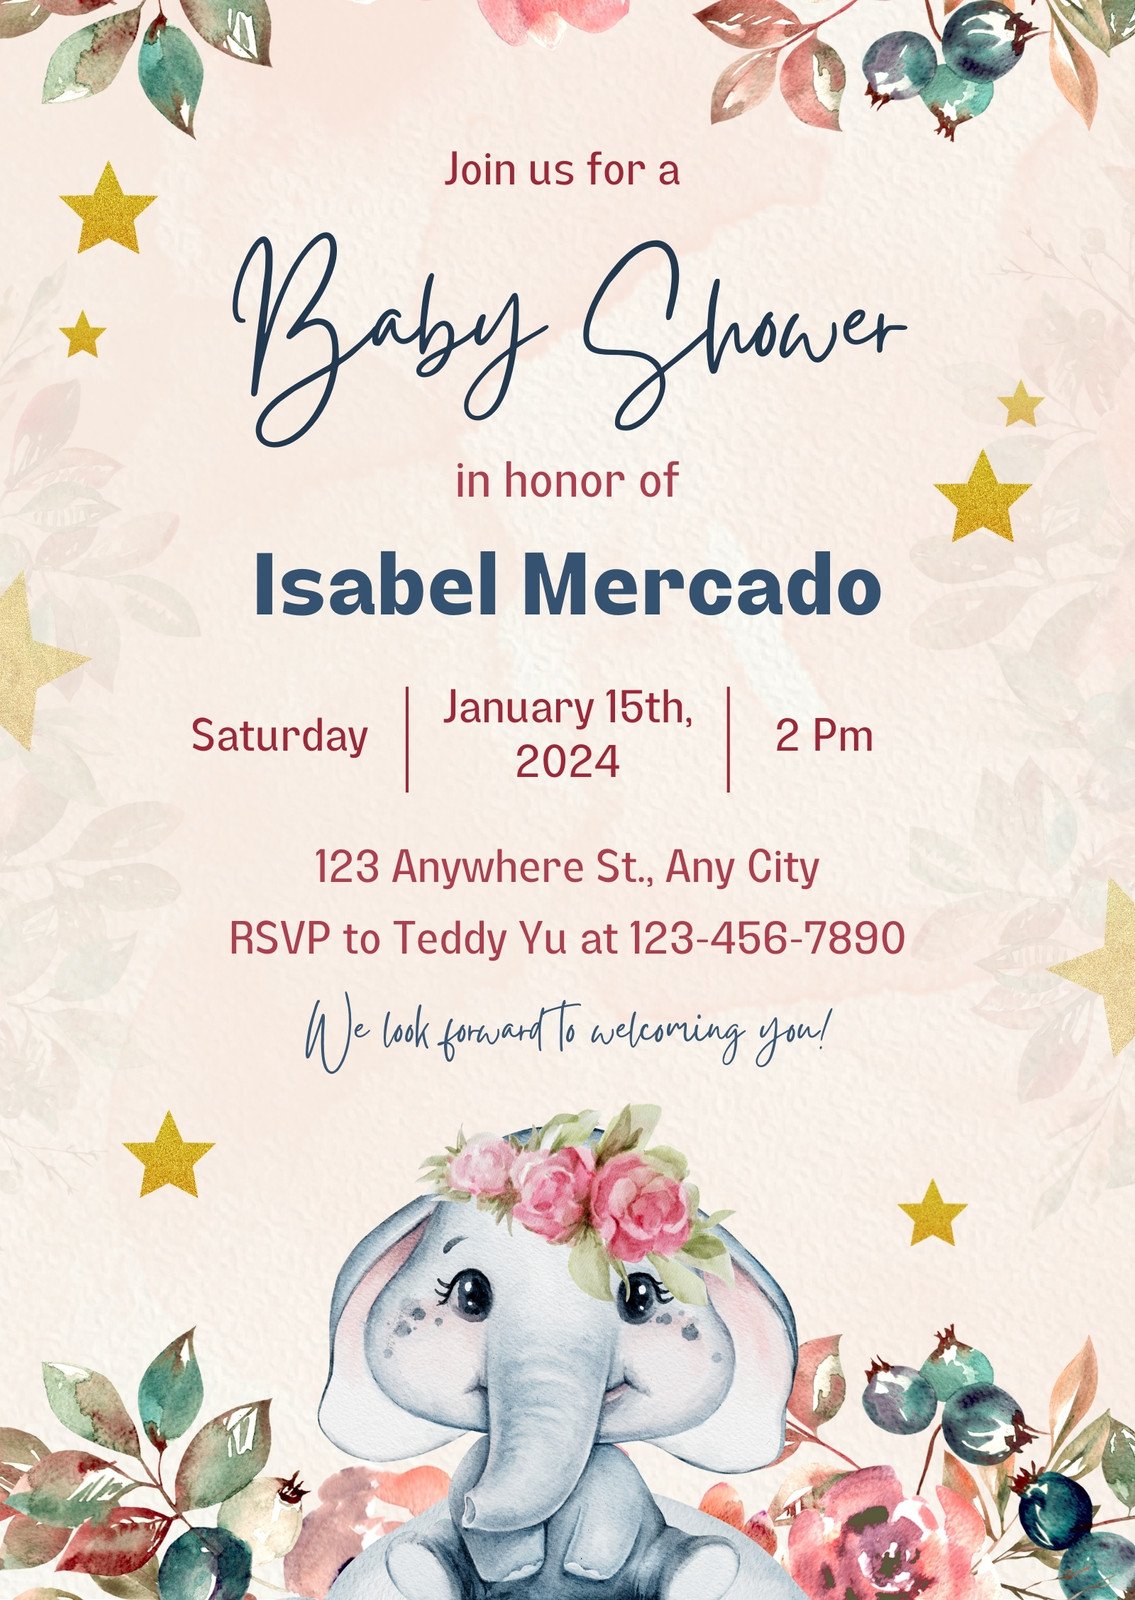 free, custom printable baby shower invitation templates | canva